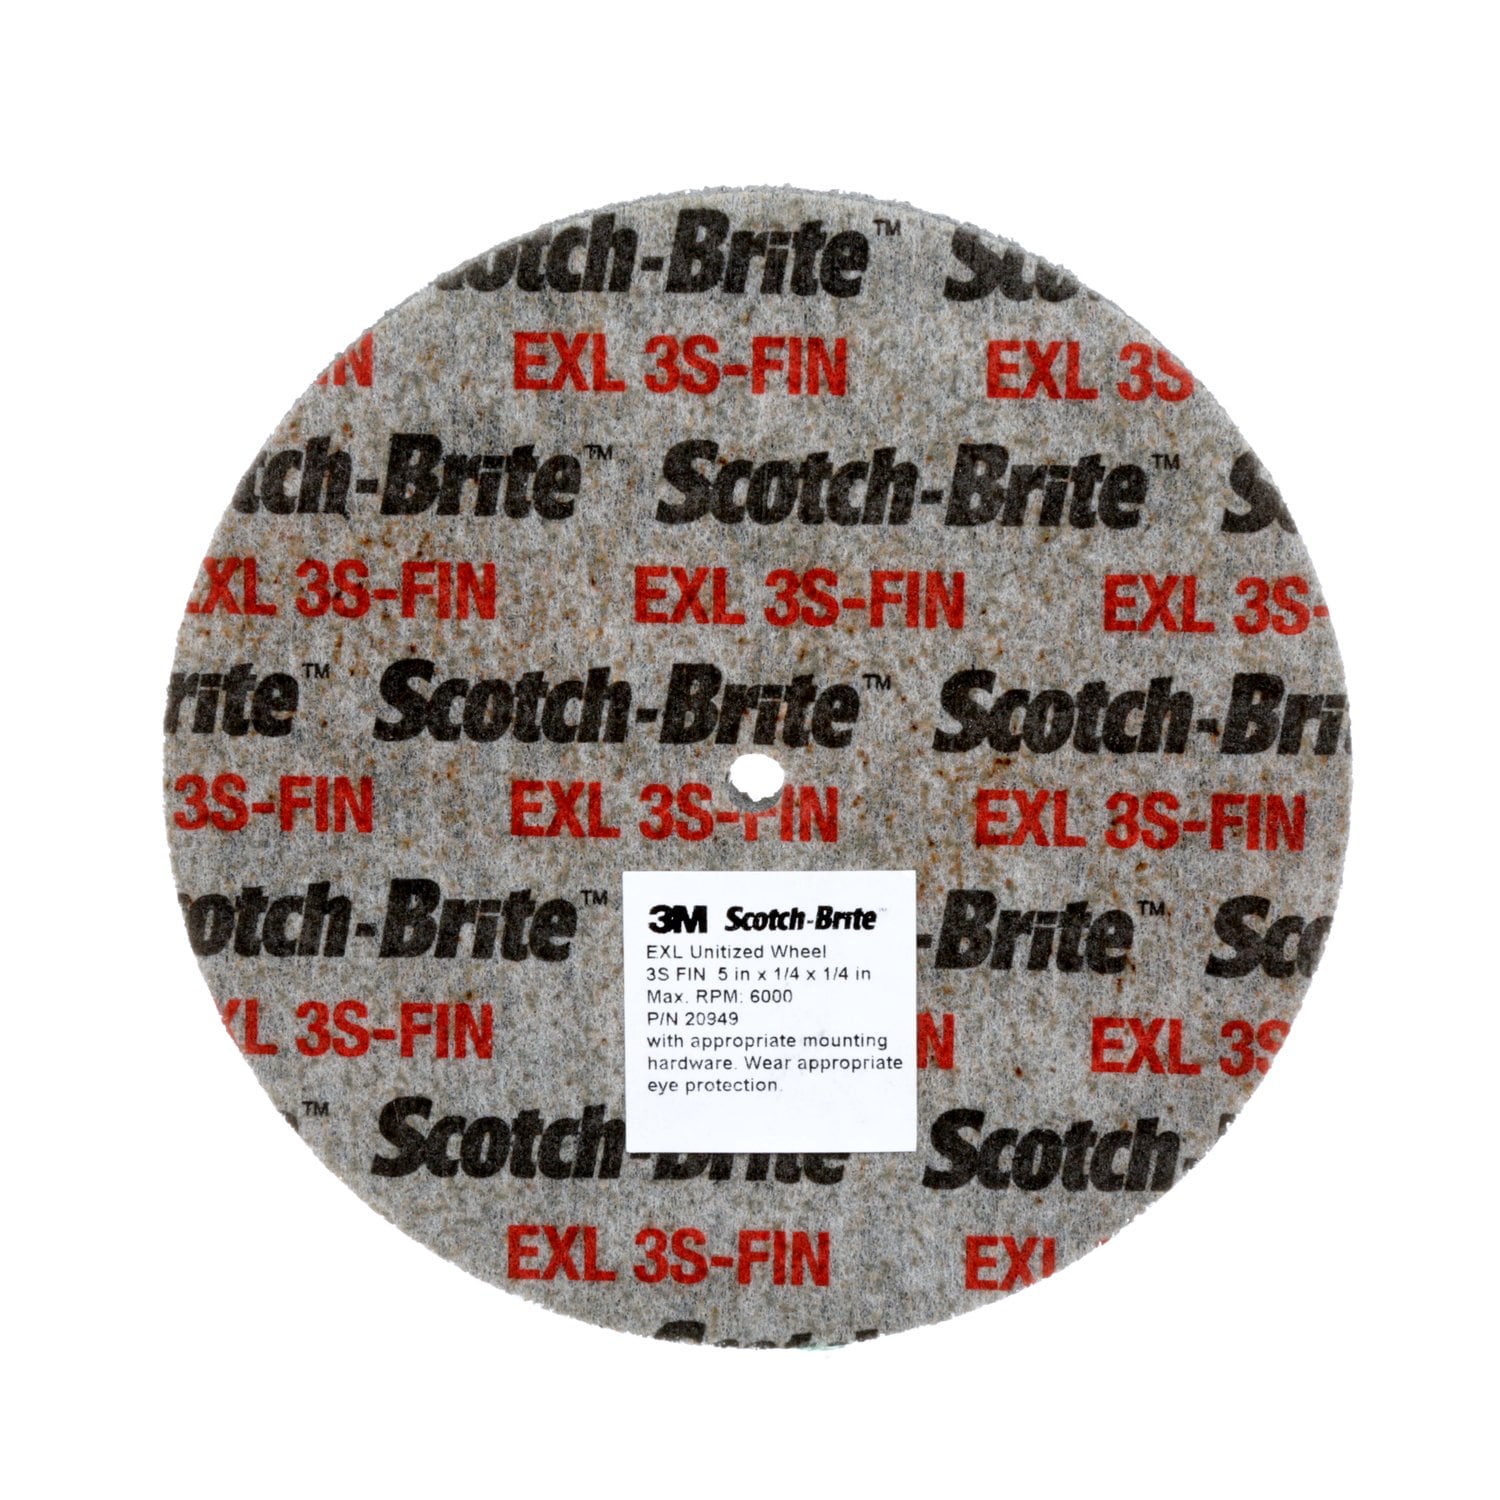 7100066554 - Scotch-Brite SST Unitized Wheel, 6 in x 1 in x 1 in 7S FIN, 2 ea/Case